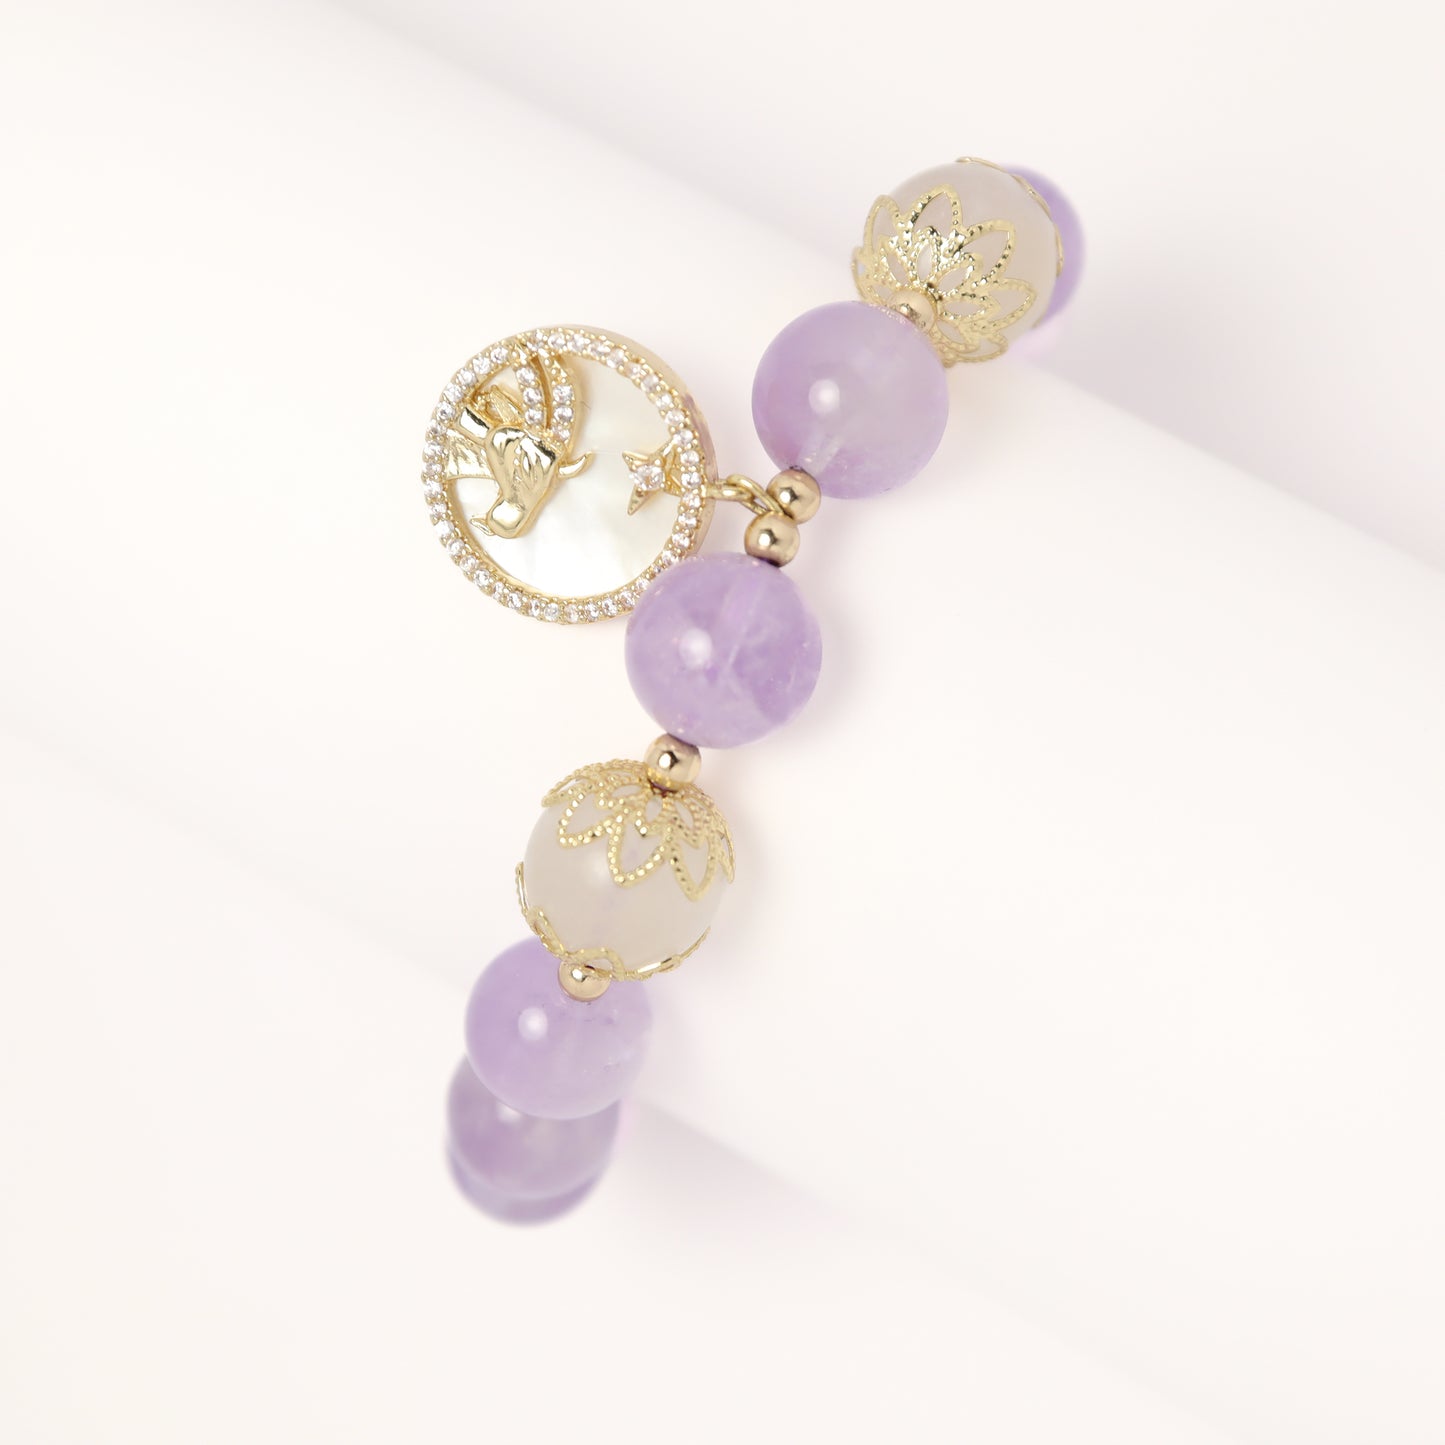 Zodiac - Lavender Amethyst & Moonstone With 12 Constellation Pendant Bracelet